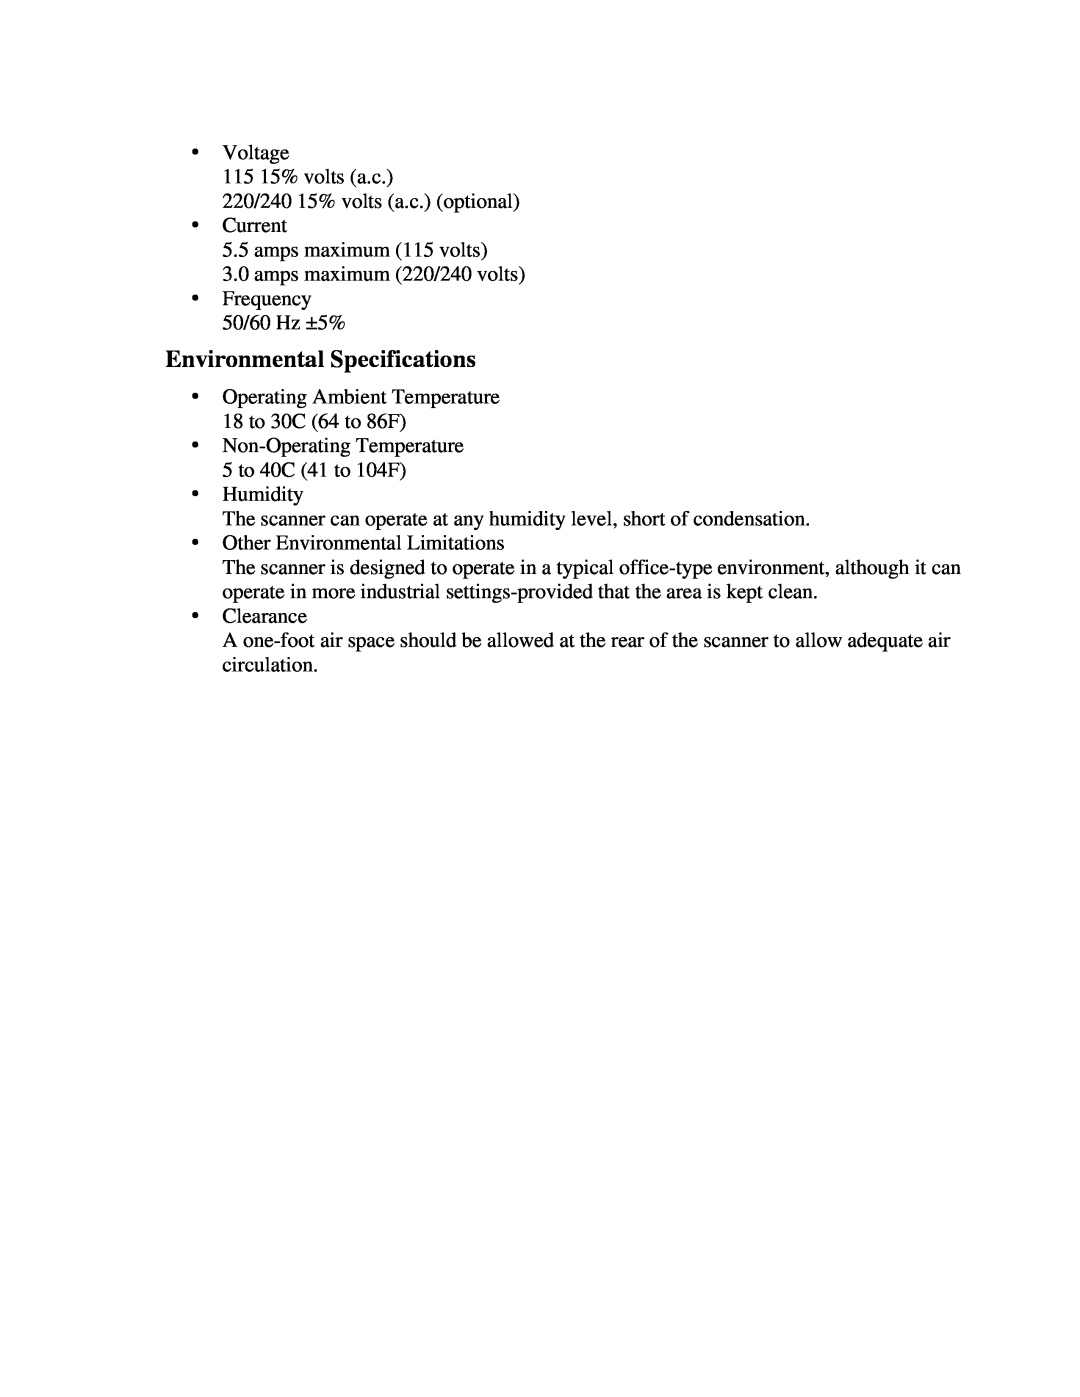 IBM CF Series manual Environmental Specifications 